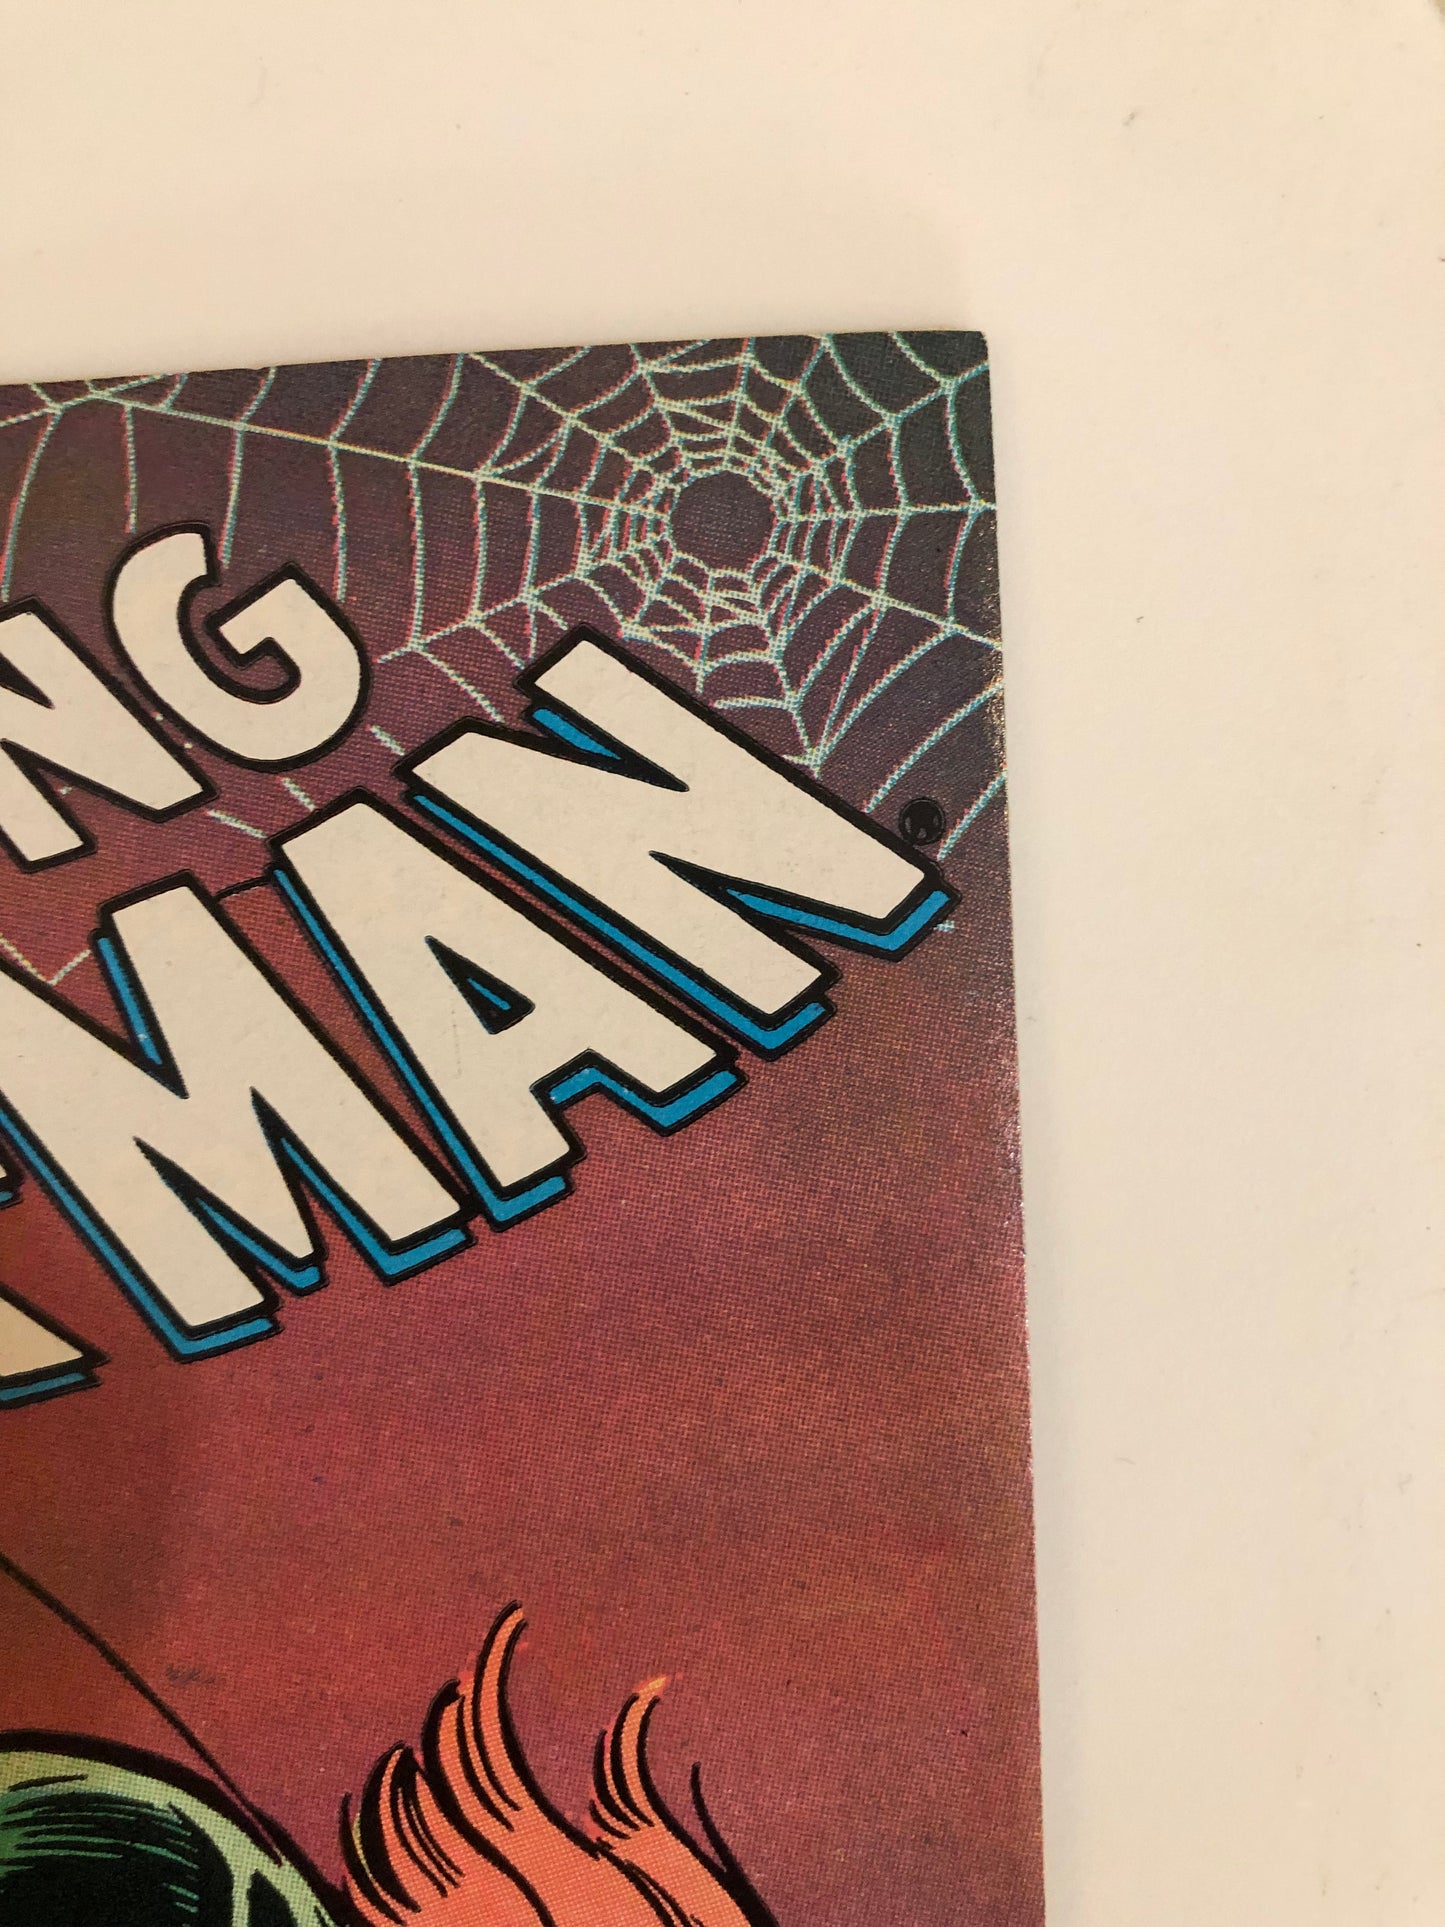 The Amazing Spider-Man #257